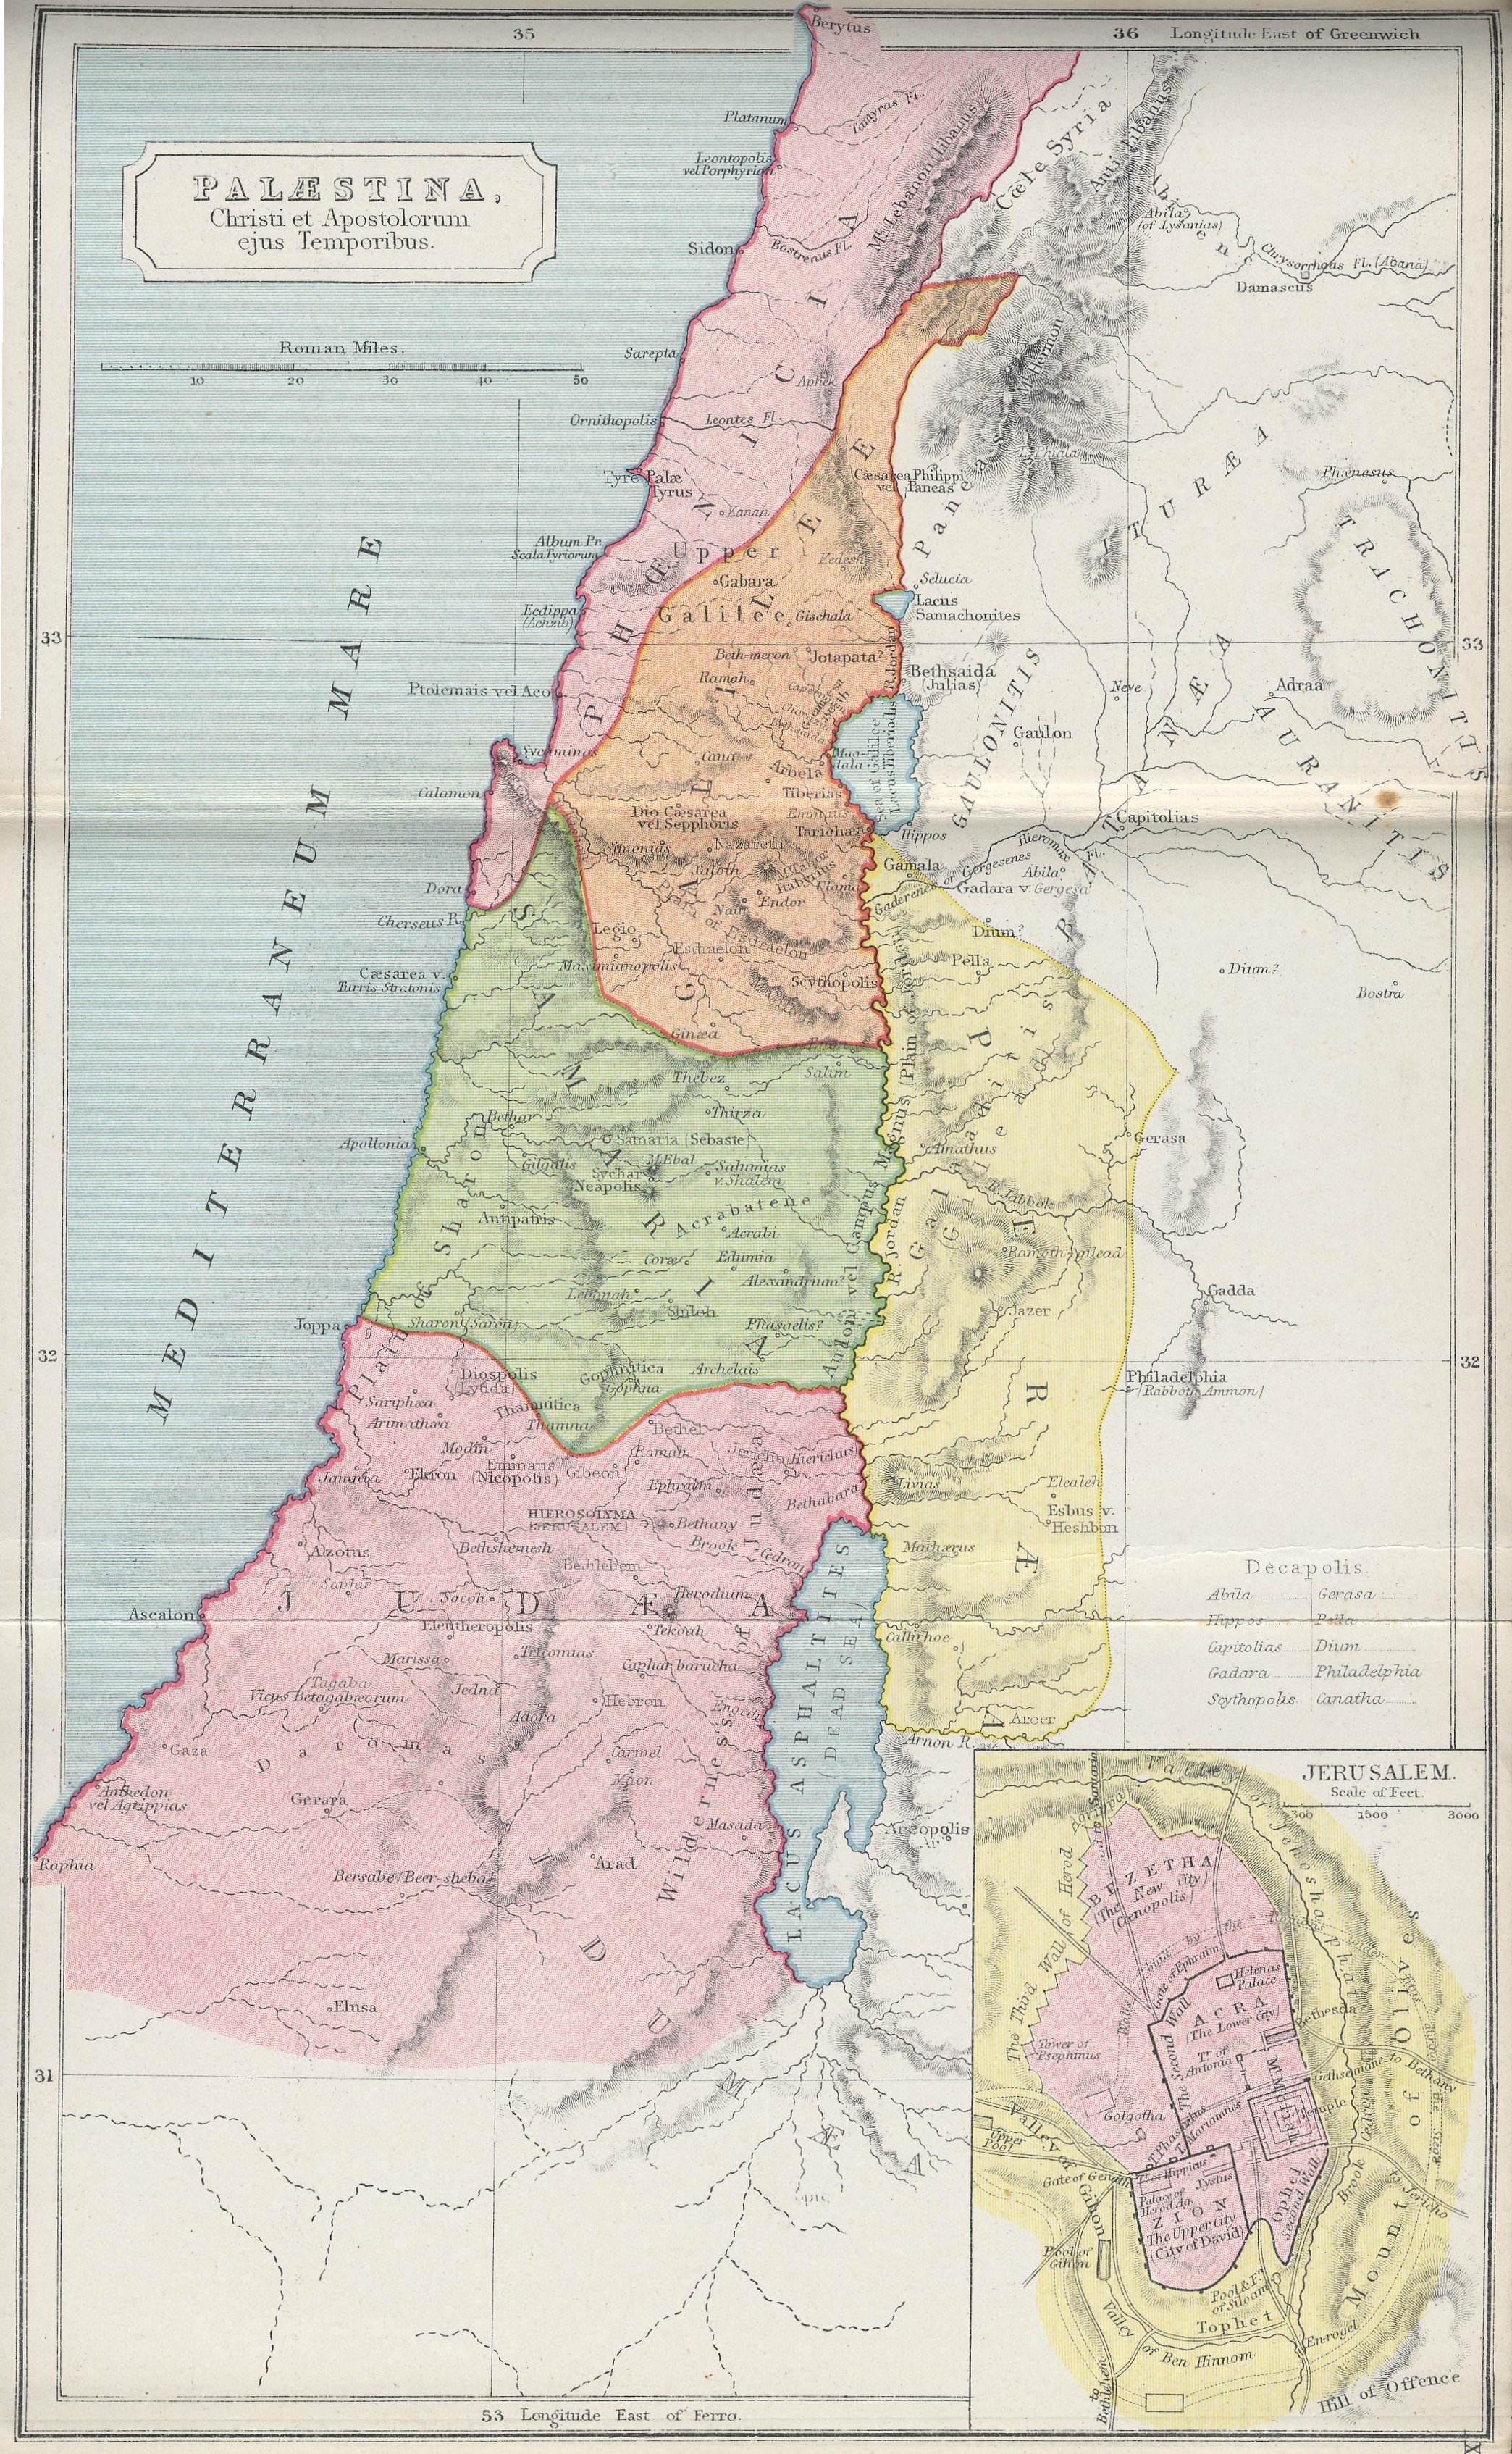 Map of Palestine70 BC - AD 180